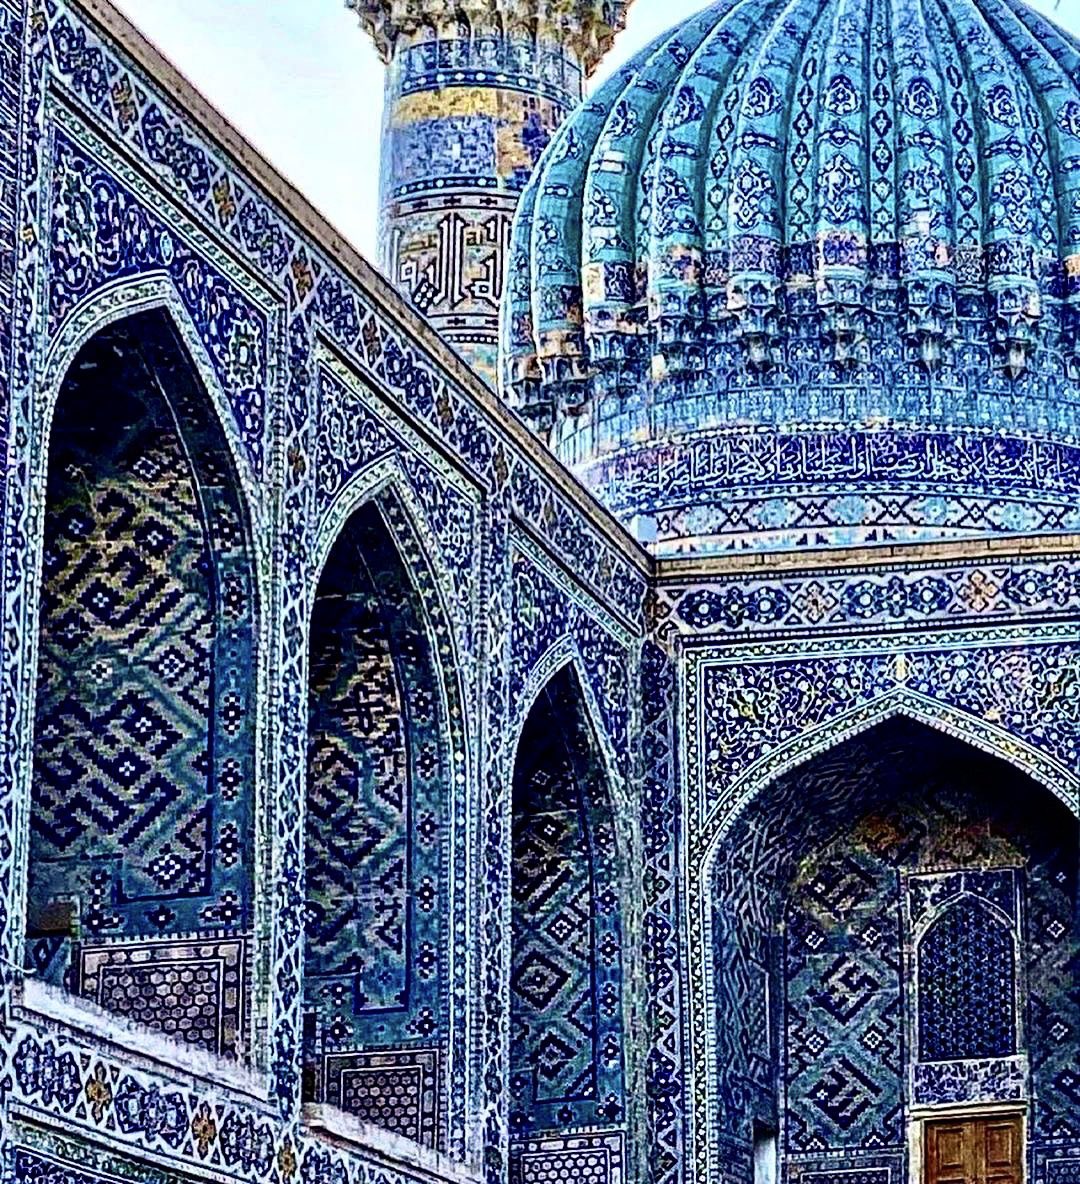 Los asombrosos mosaicos azules de la arquitectura islámica de Uzbekistán…